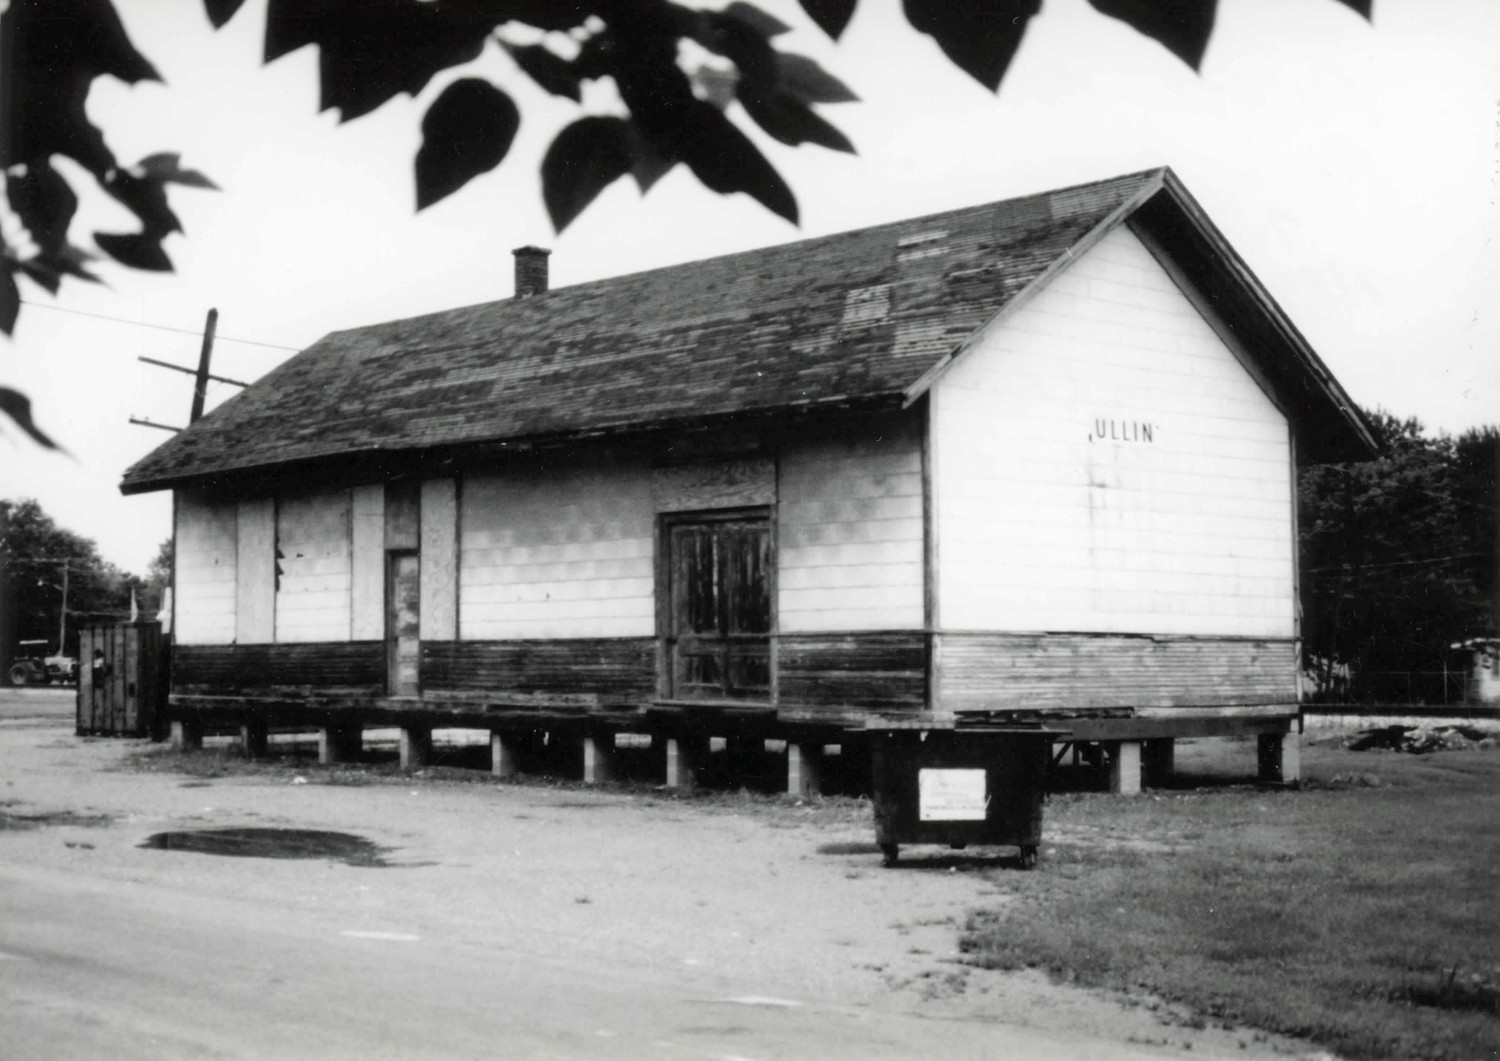 Illinois Central Railroad Depot, Ullin Illinois East front side (1998)